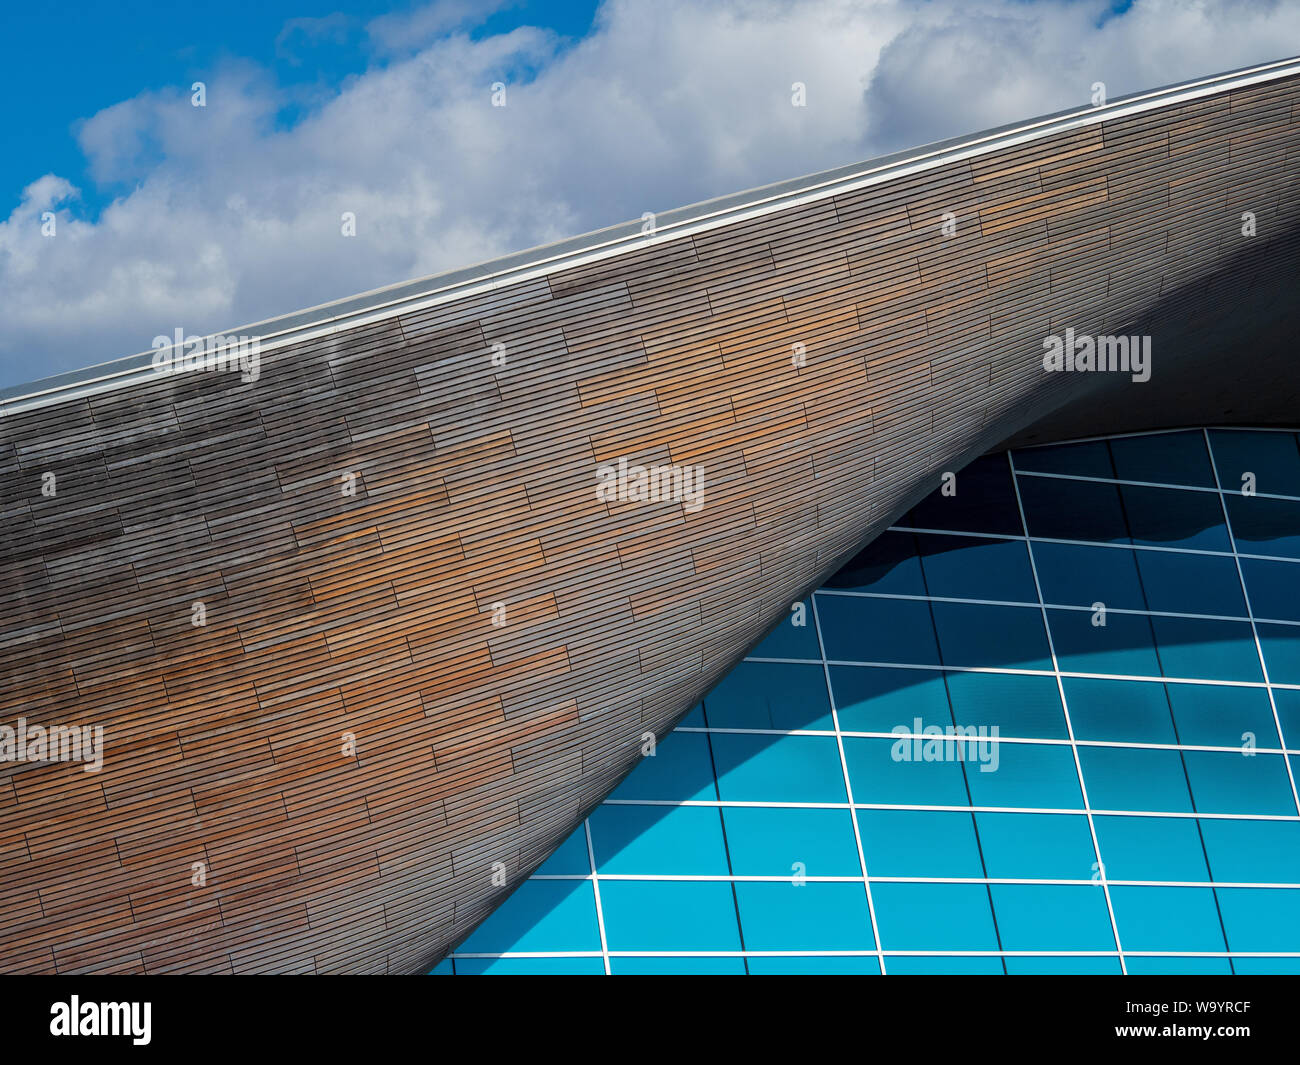 London Aquatics Center Design Details - Olympics Pools für Olympia 2012 - Design Zaha Hadid Architects. Kompl. 2011, kostet £ 269 Millionen. Stockfoto